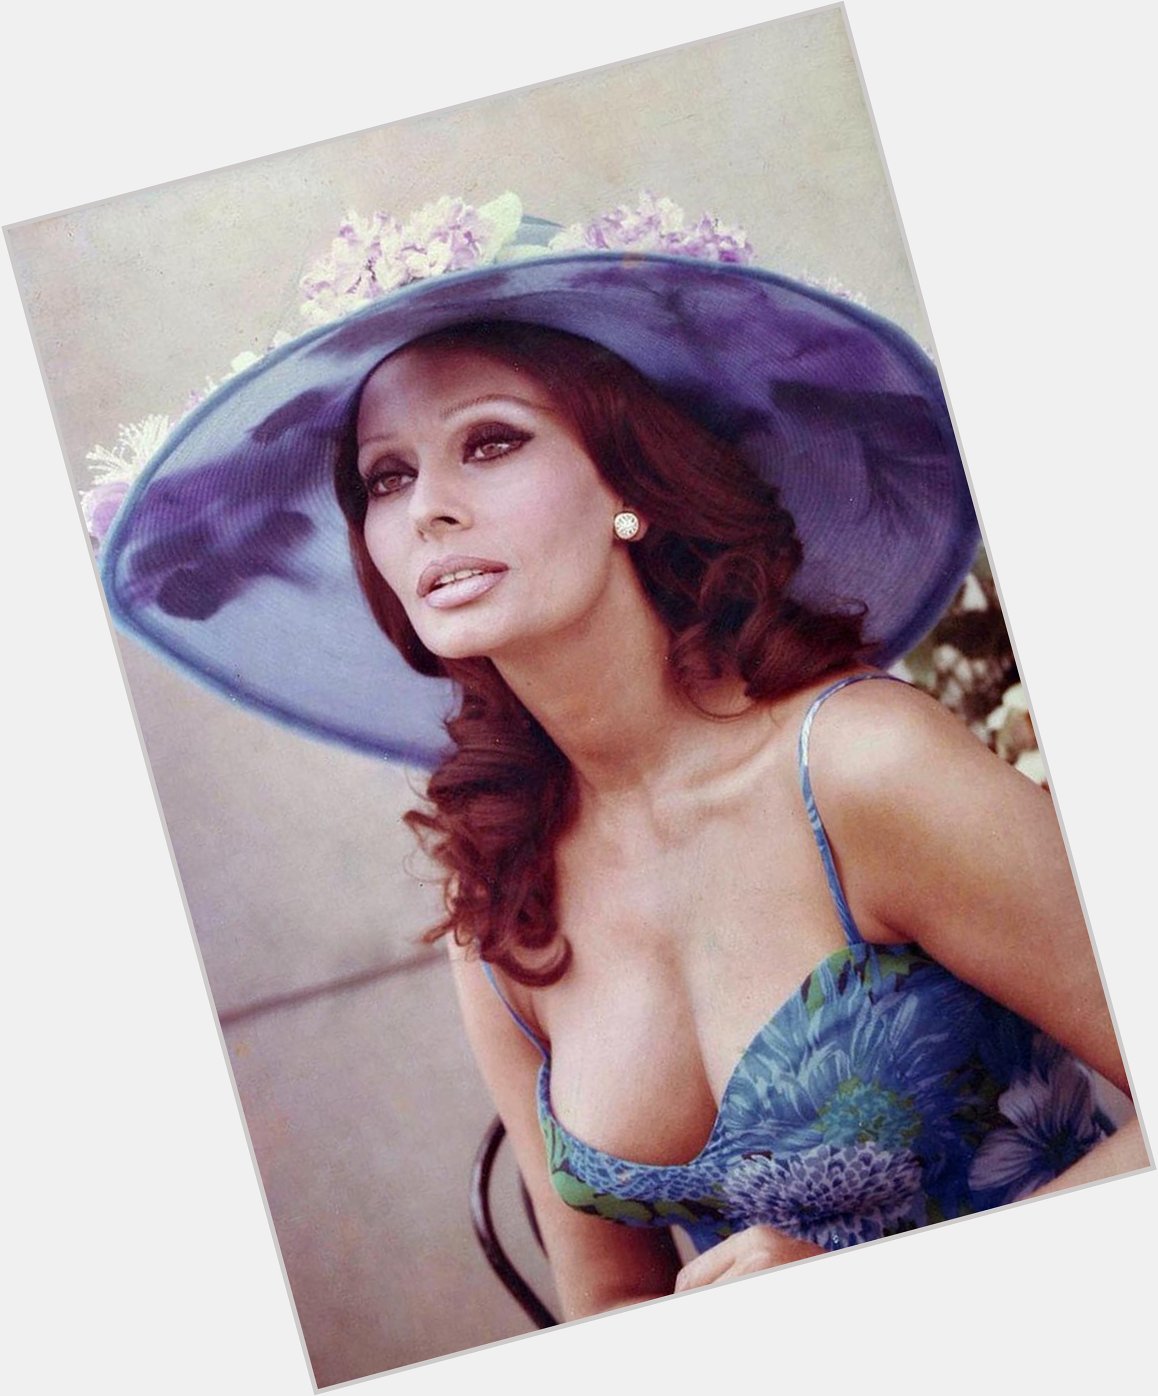 Happy 83rd birthday, Sophia Loren!  